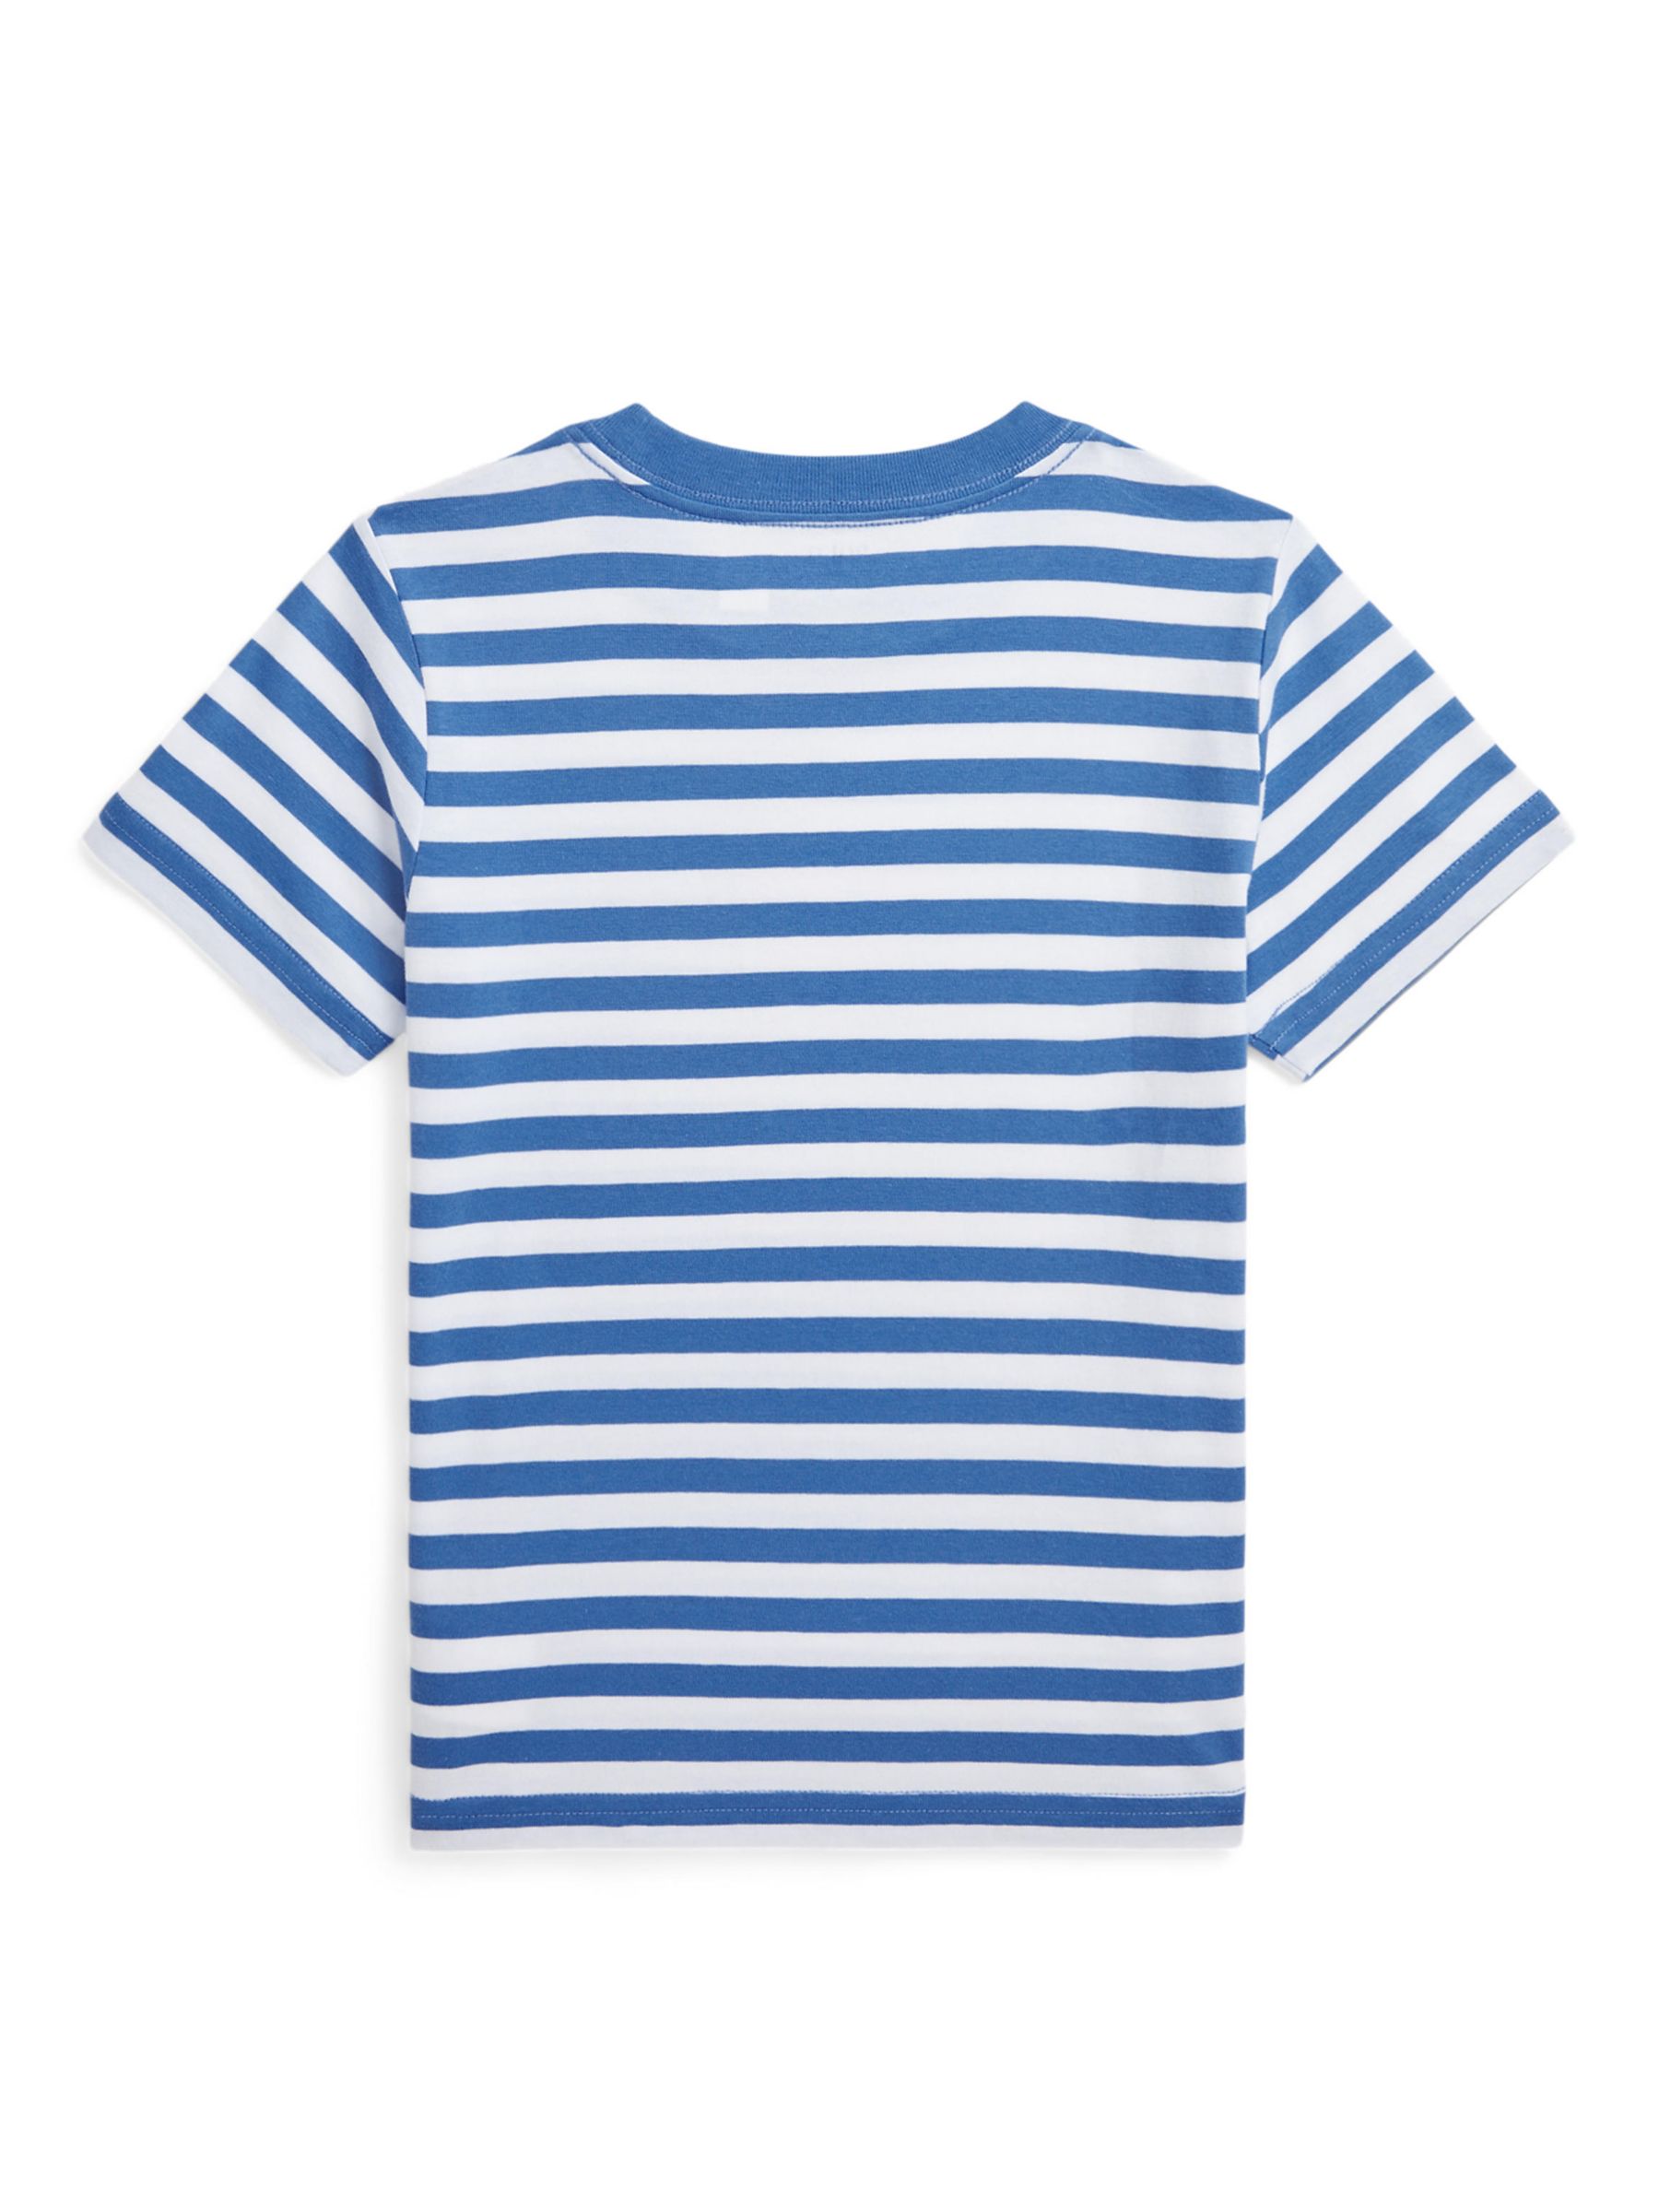 Ralph Lauren Kids' Polo Paris Bear Stripe T-Shirt, Blue/Multi, 7 years